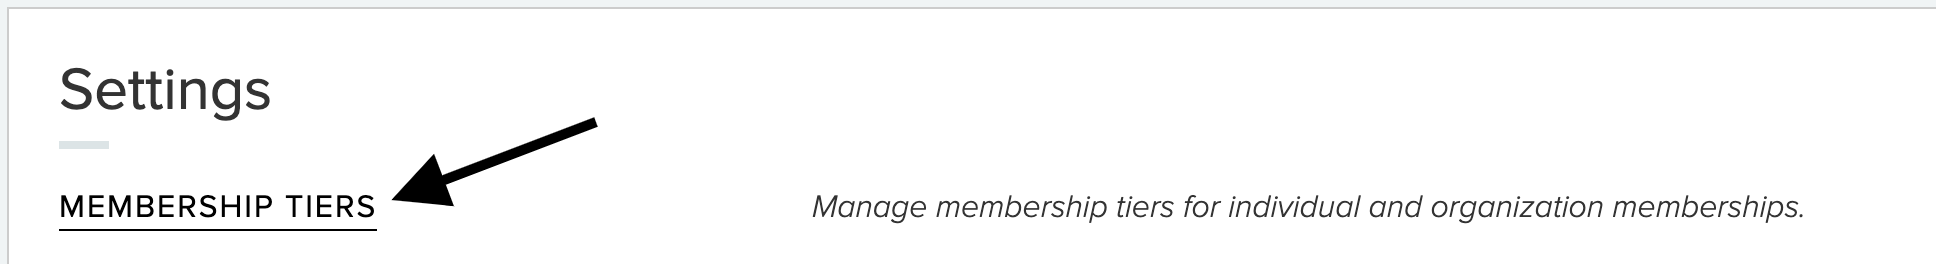 wicket-admin-settings-membershiptiers.png